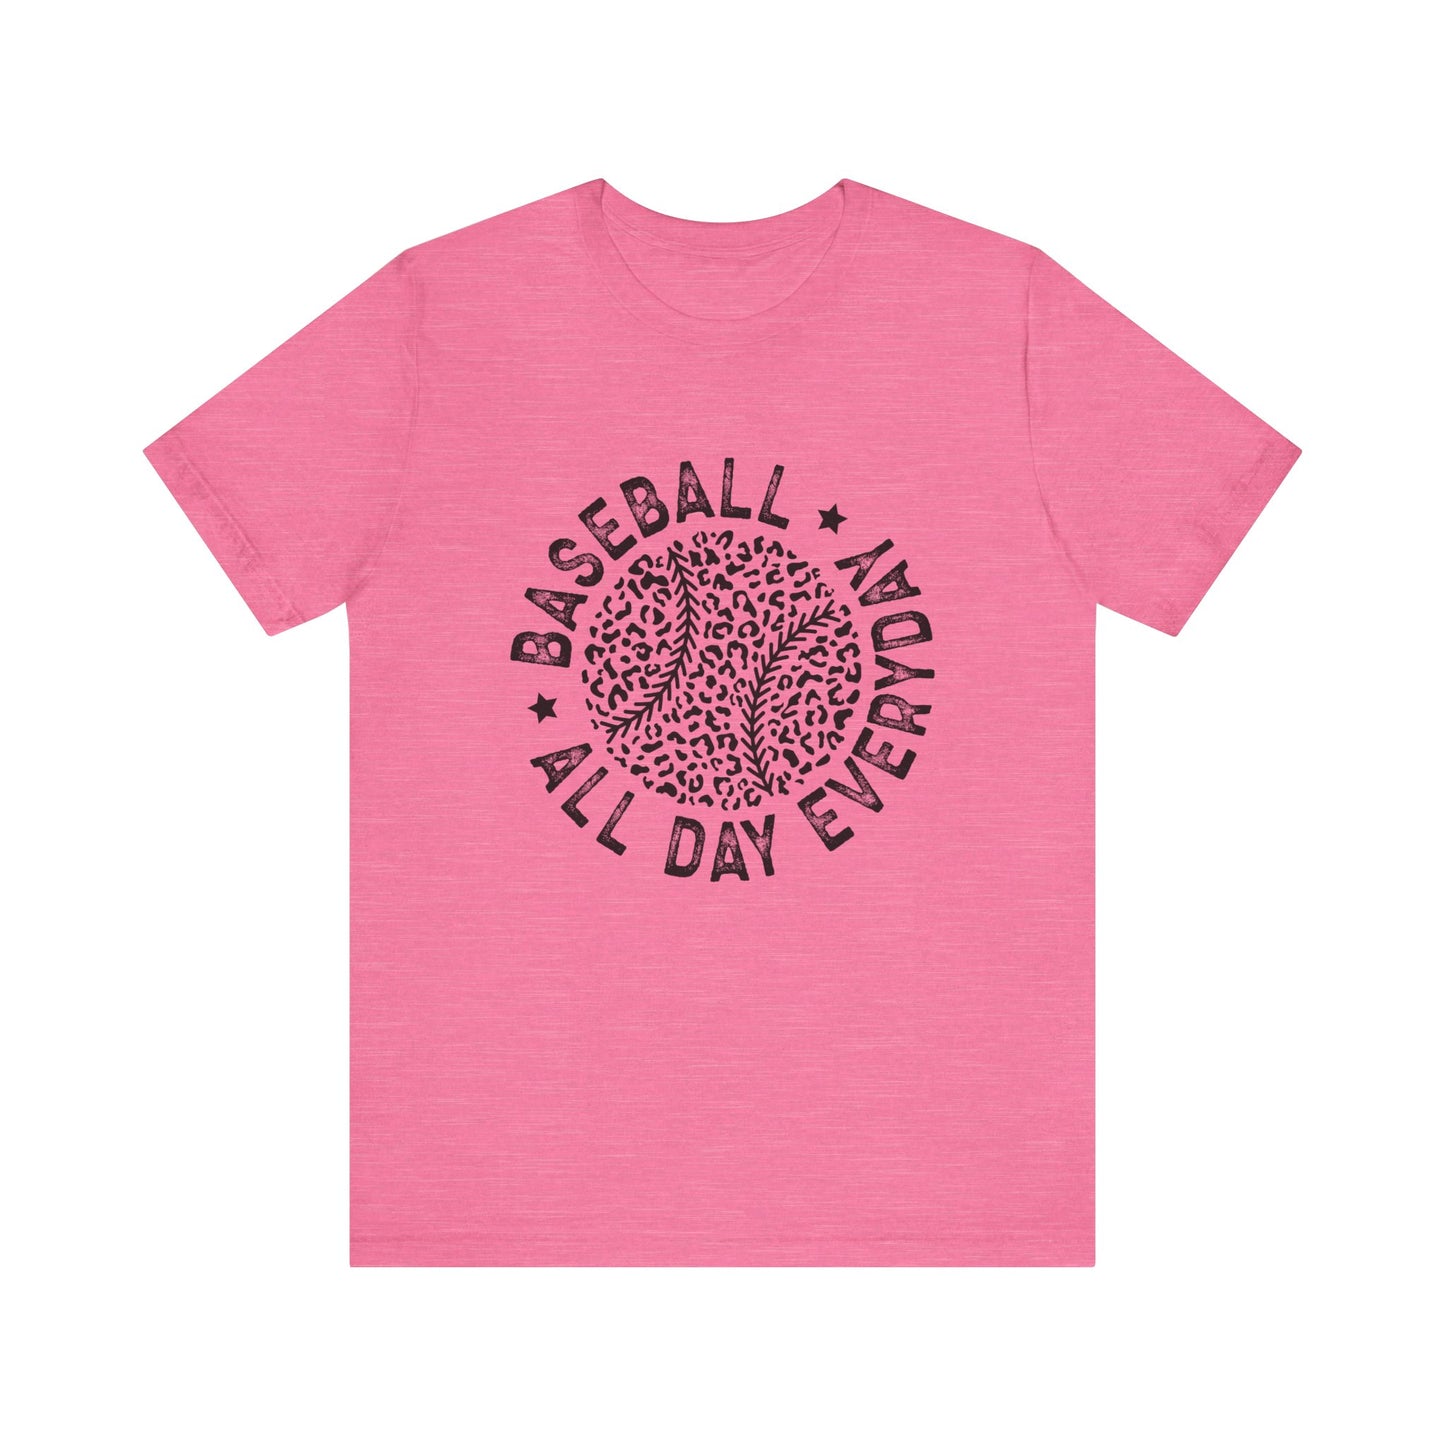 Baseball All Day Every Day Adult UnisexTshirt  Short Sleeve Tee